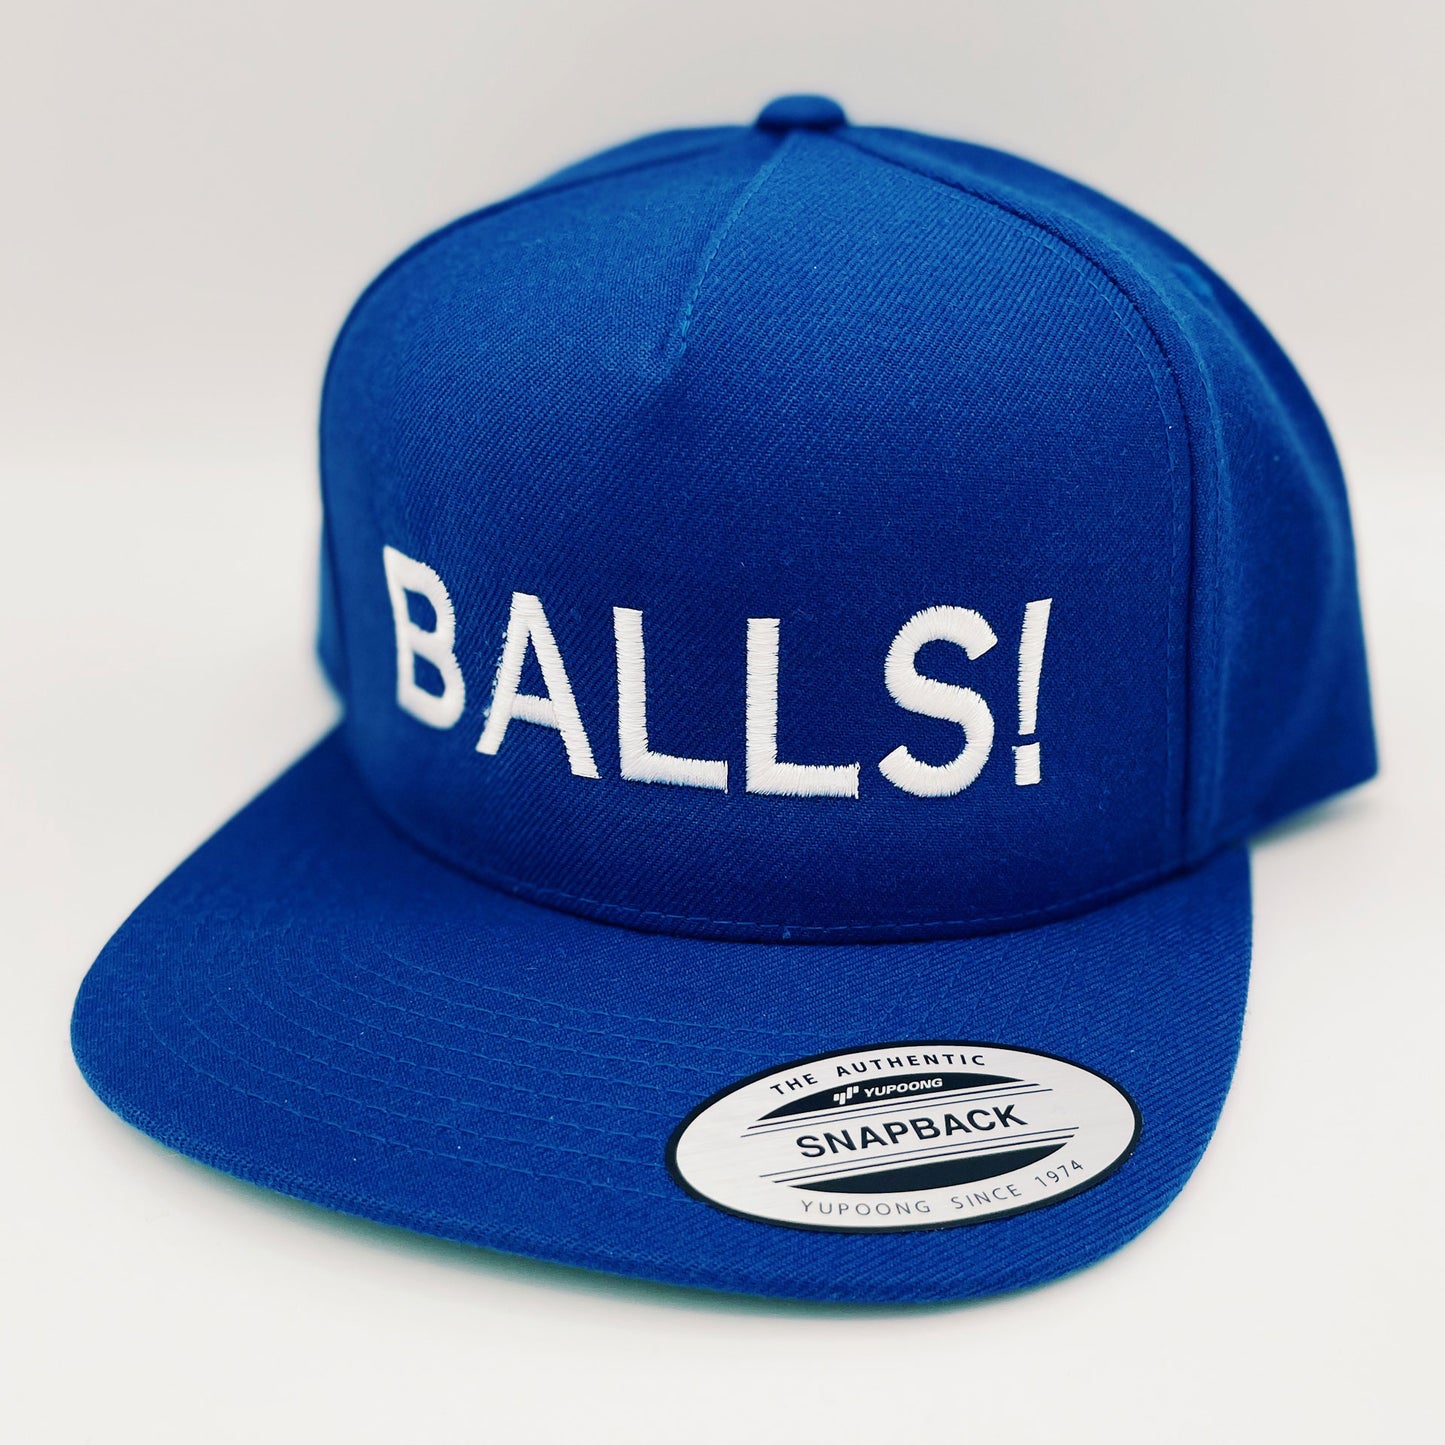 Blue balls hat